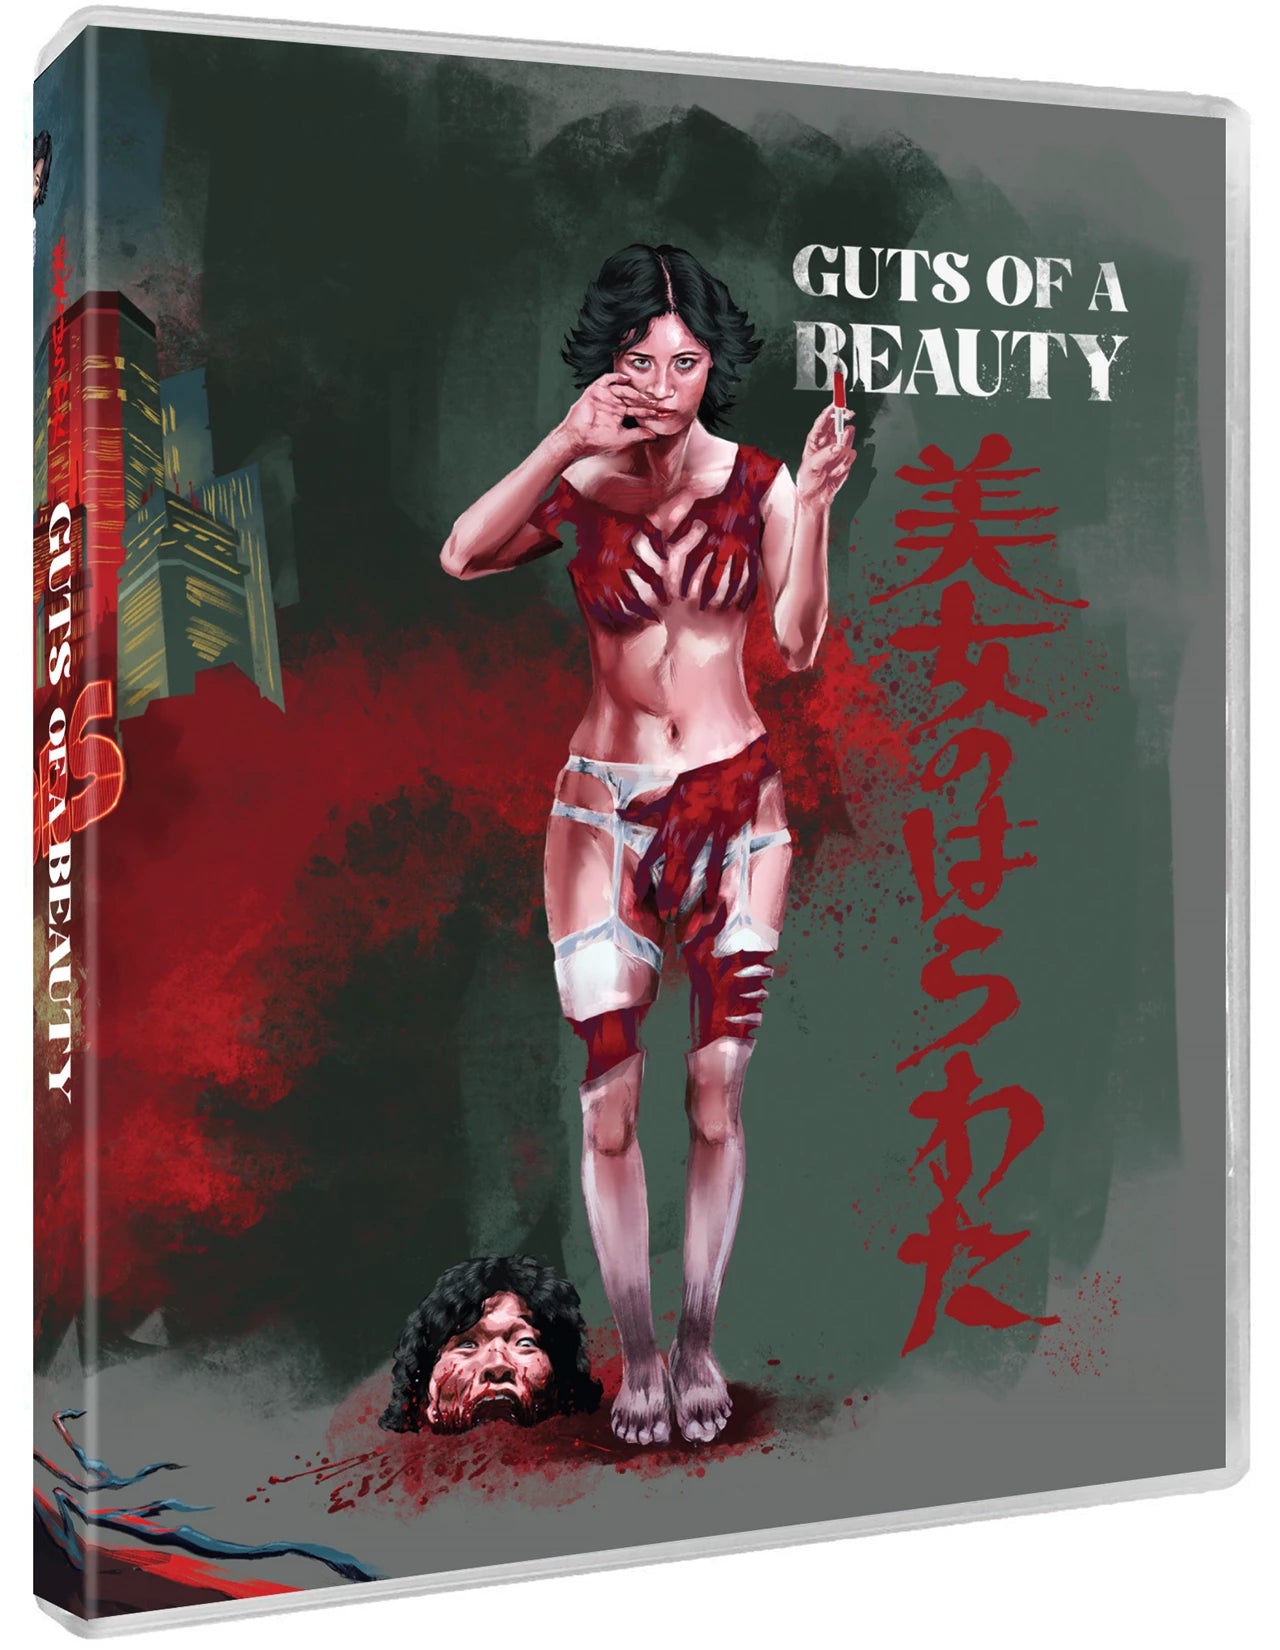 PRE-ORDER Gairas Guts Trilogy ('86 - '87) Limited Edition 88 Films UK - Blu-ray Region B